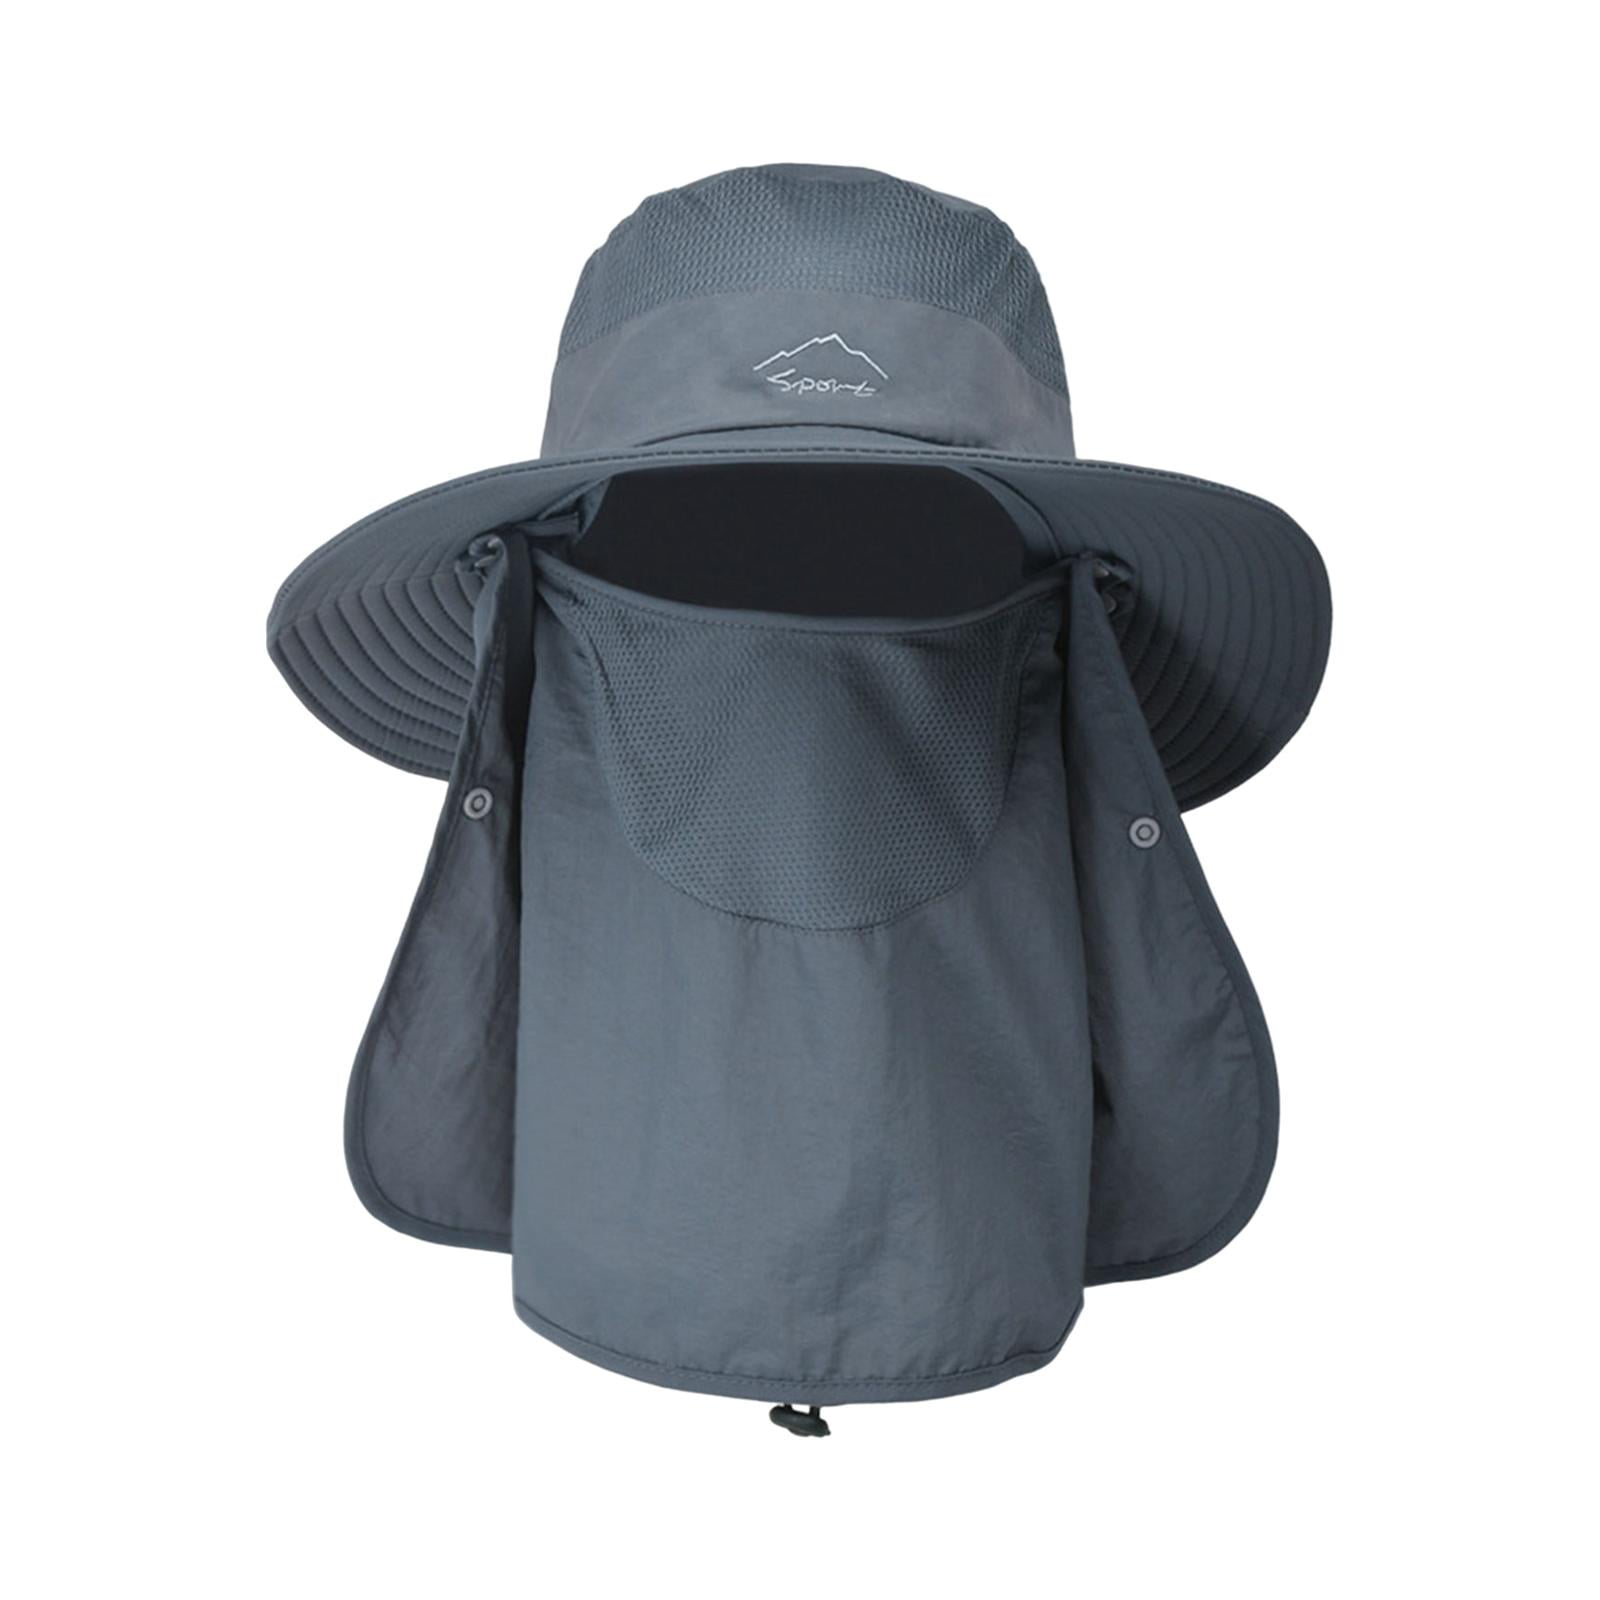 Bucket Hat or Baseball Cap for Sun Protection? – Rayward Apparel